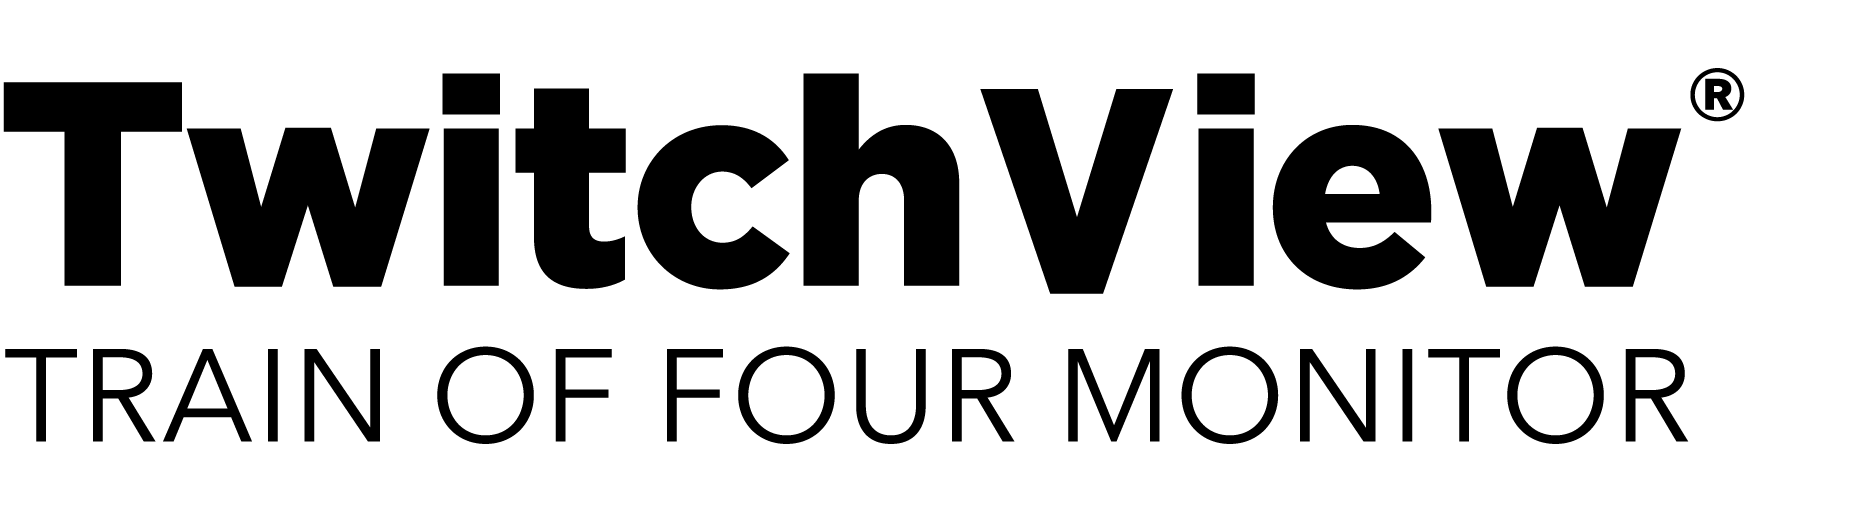 TwitchView_Logo-BLACK-Lockup_jm-1